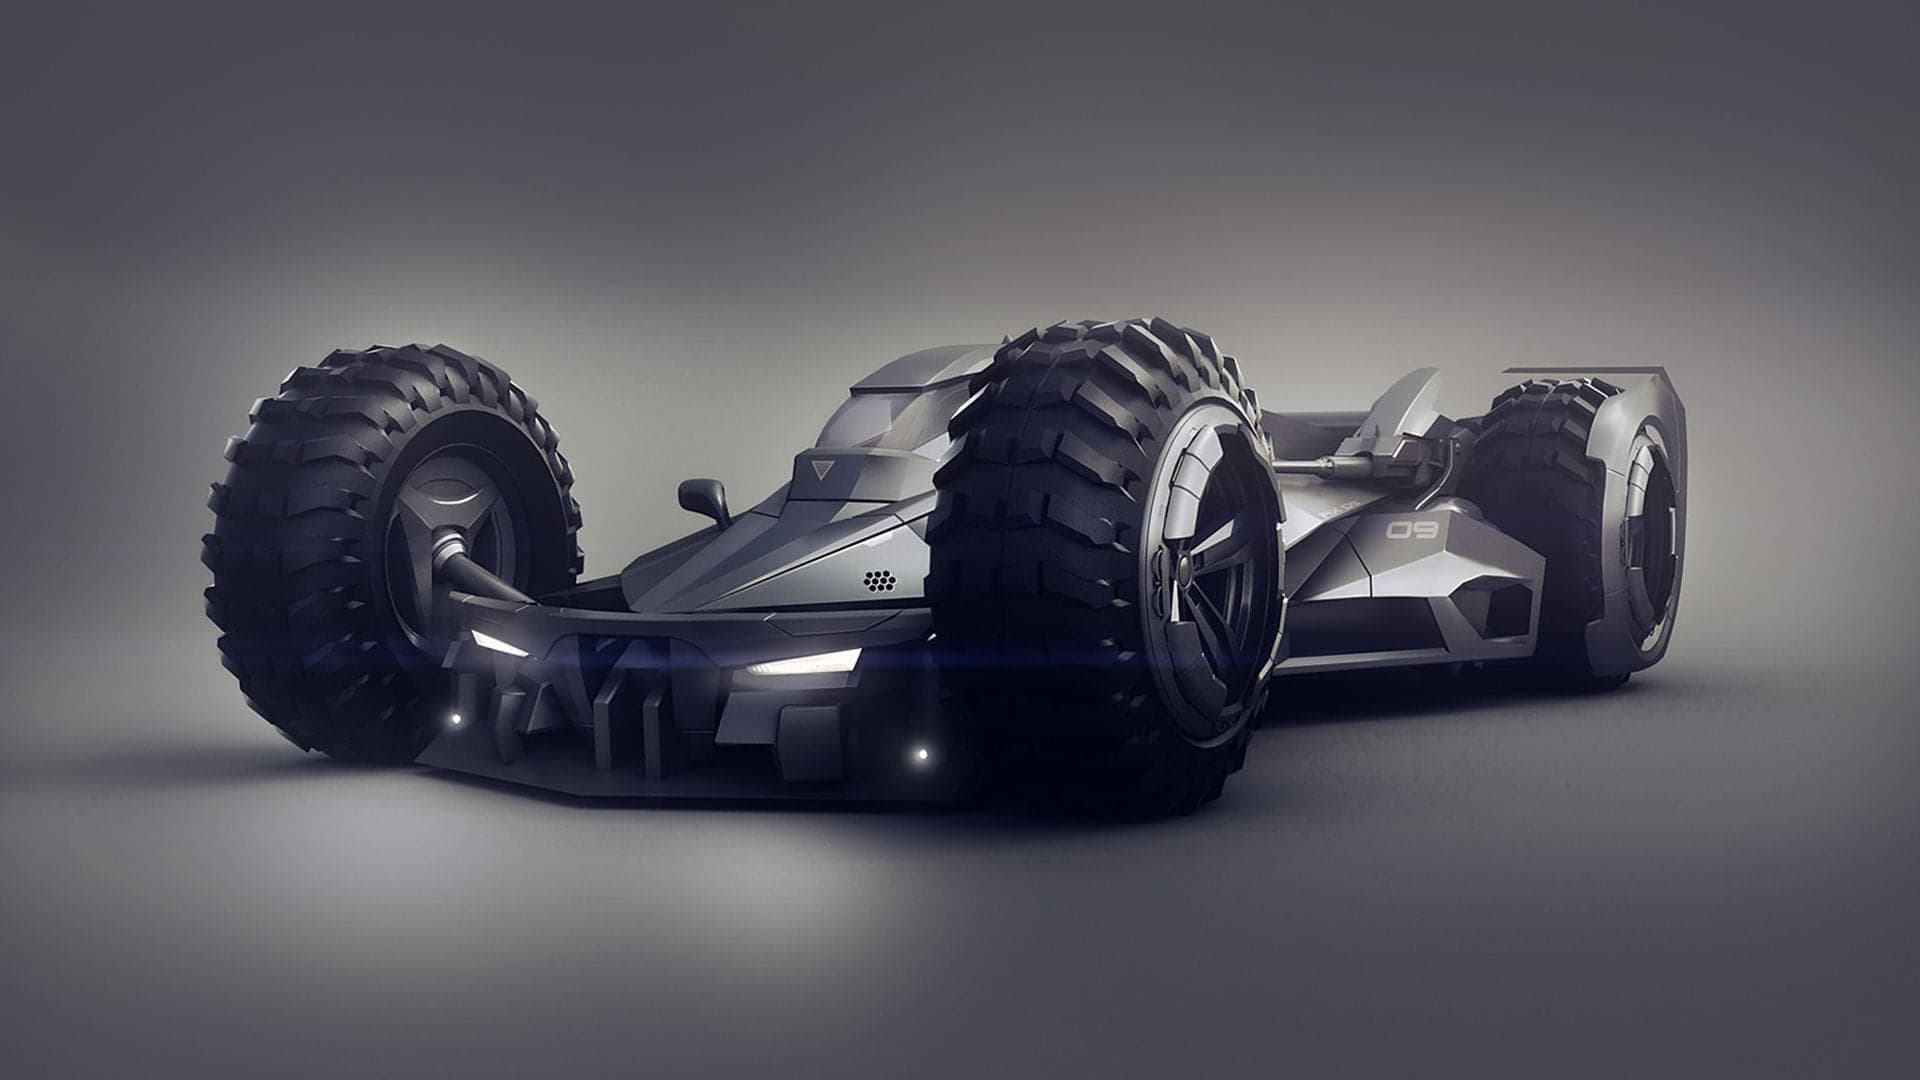 This Batmobile Concept Makes the Batman v Superman Version Look Terrible